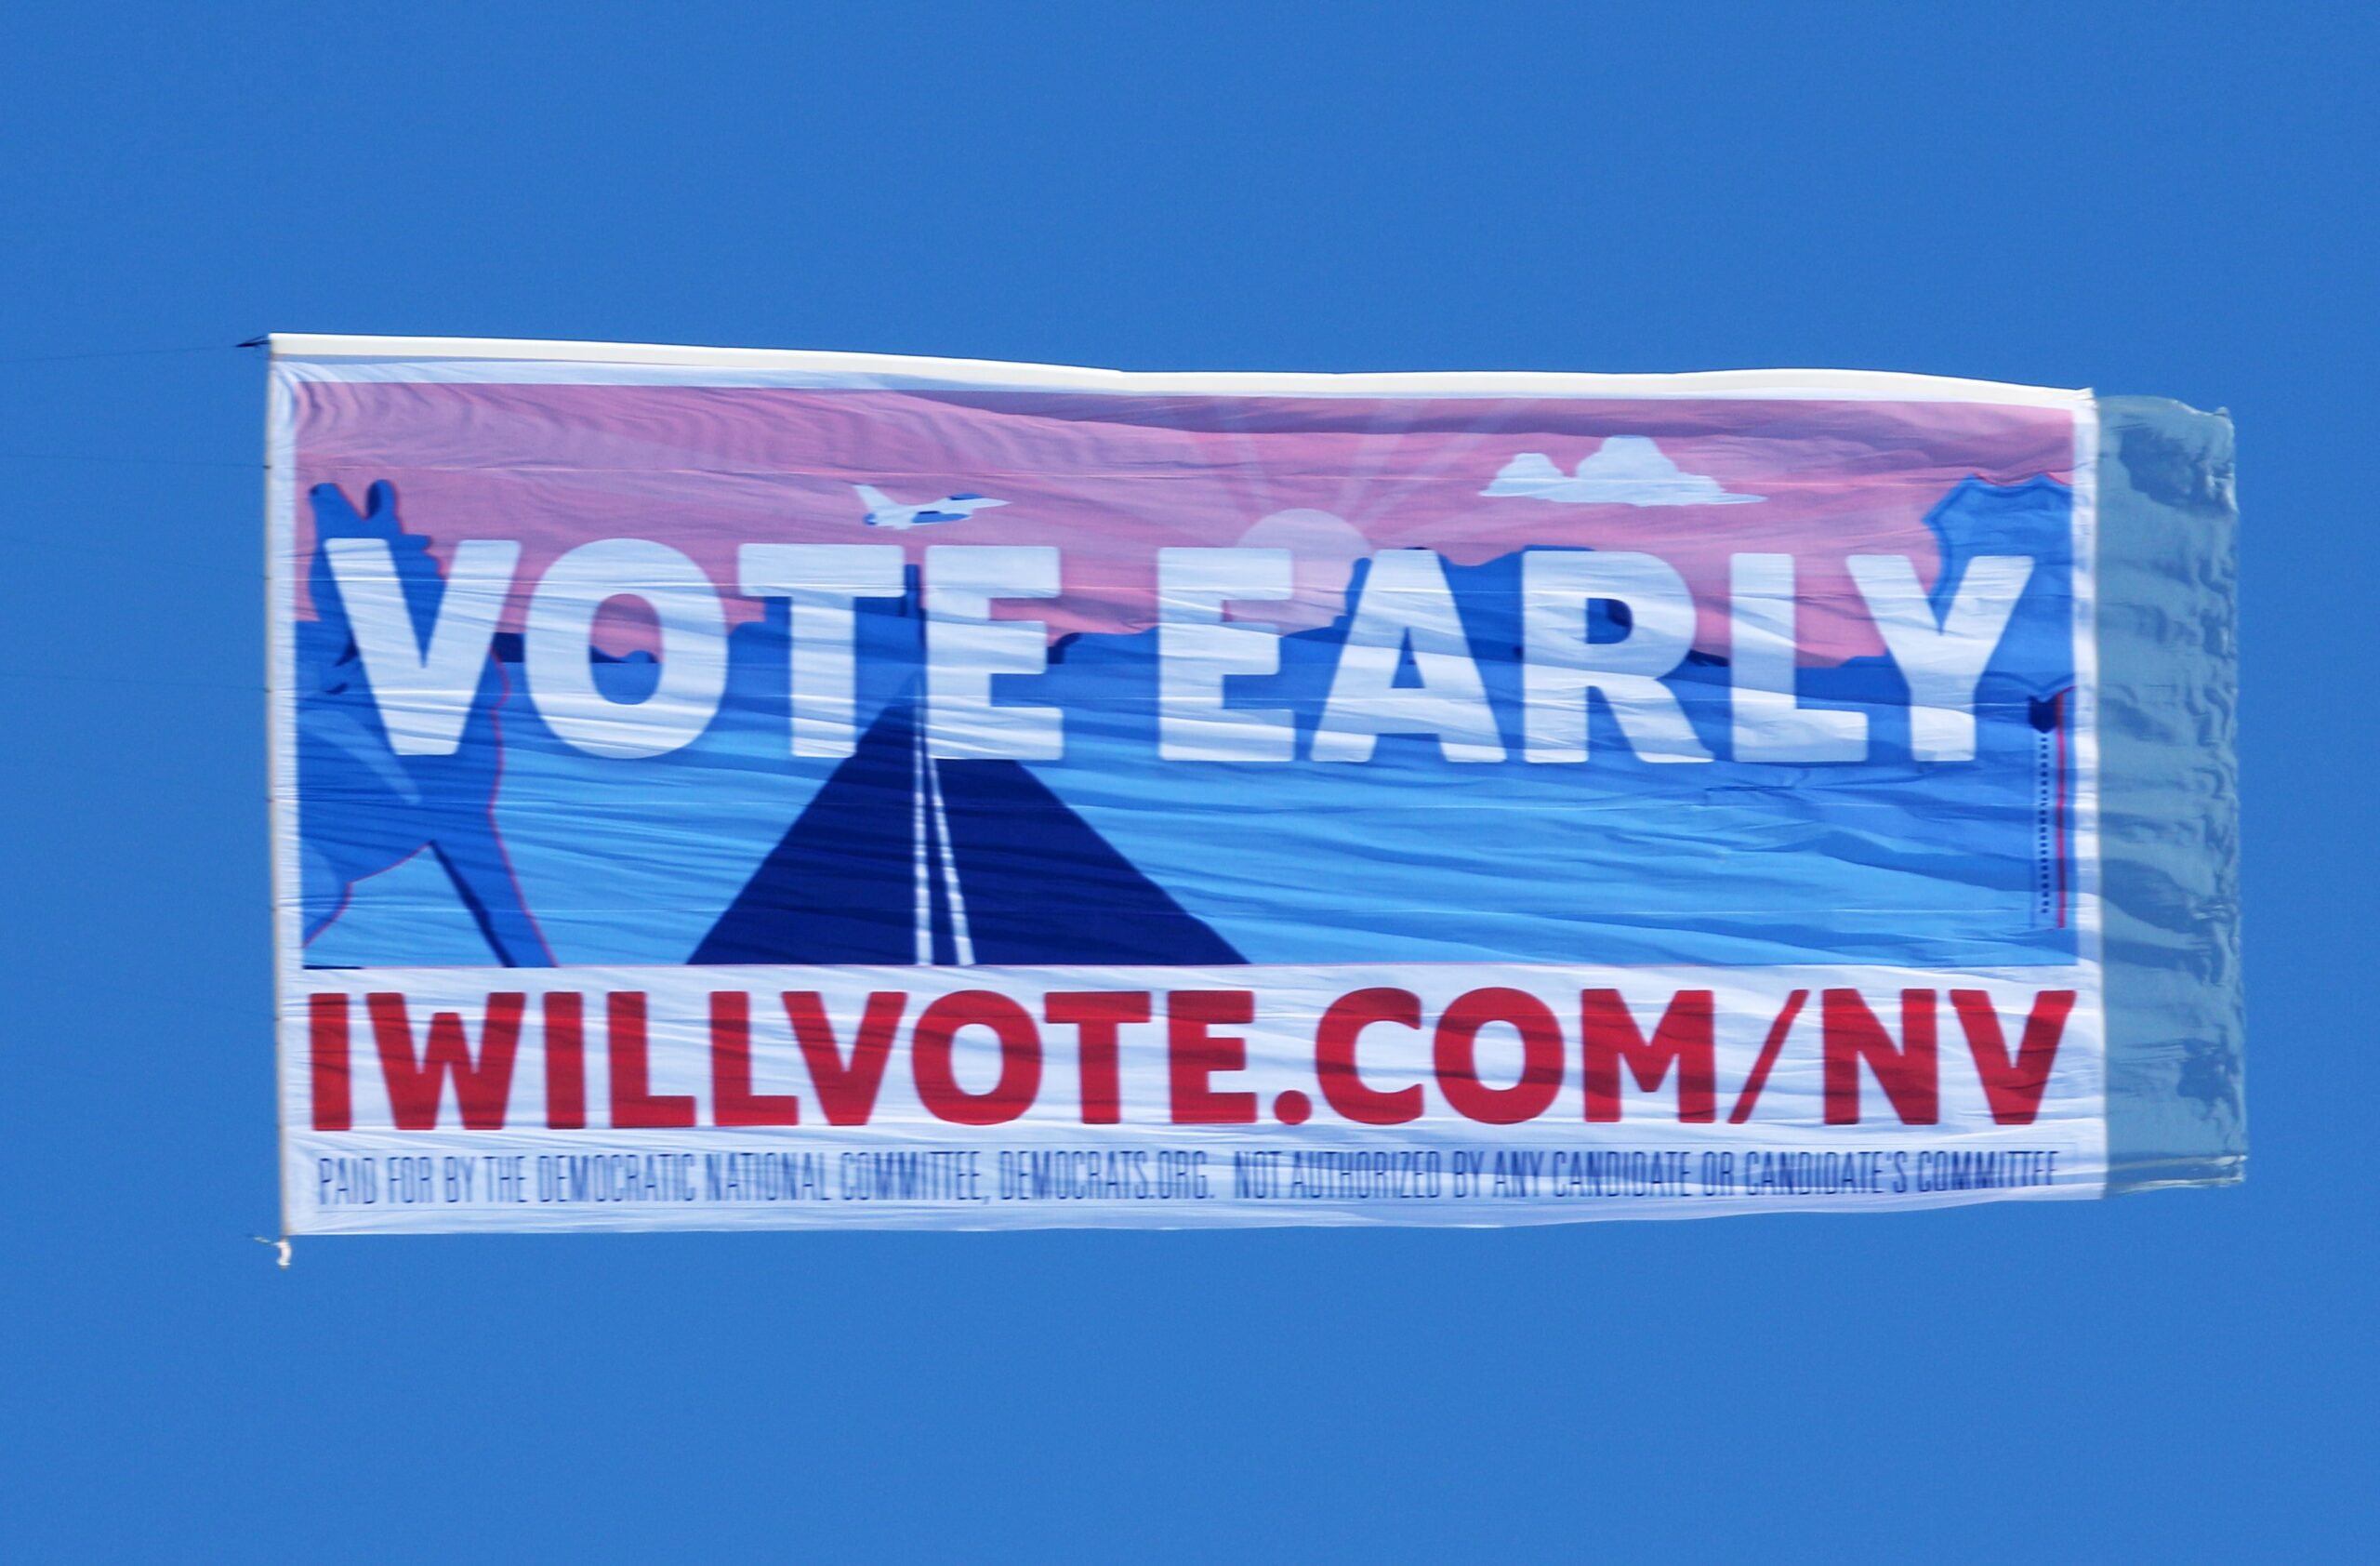 Vote early promotion banner, Election reminder sky banner